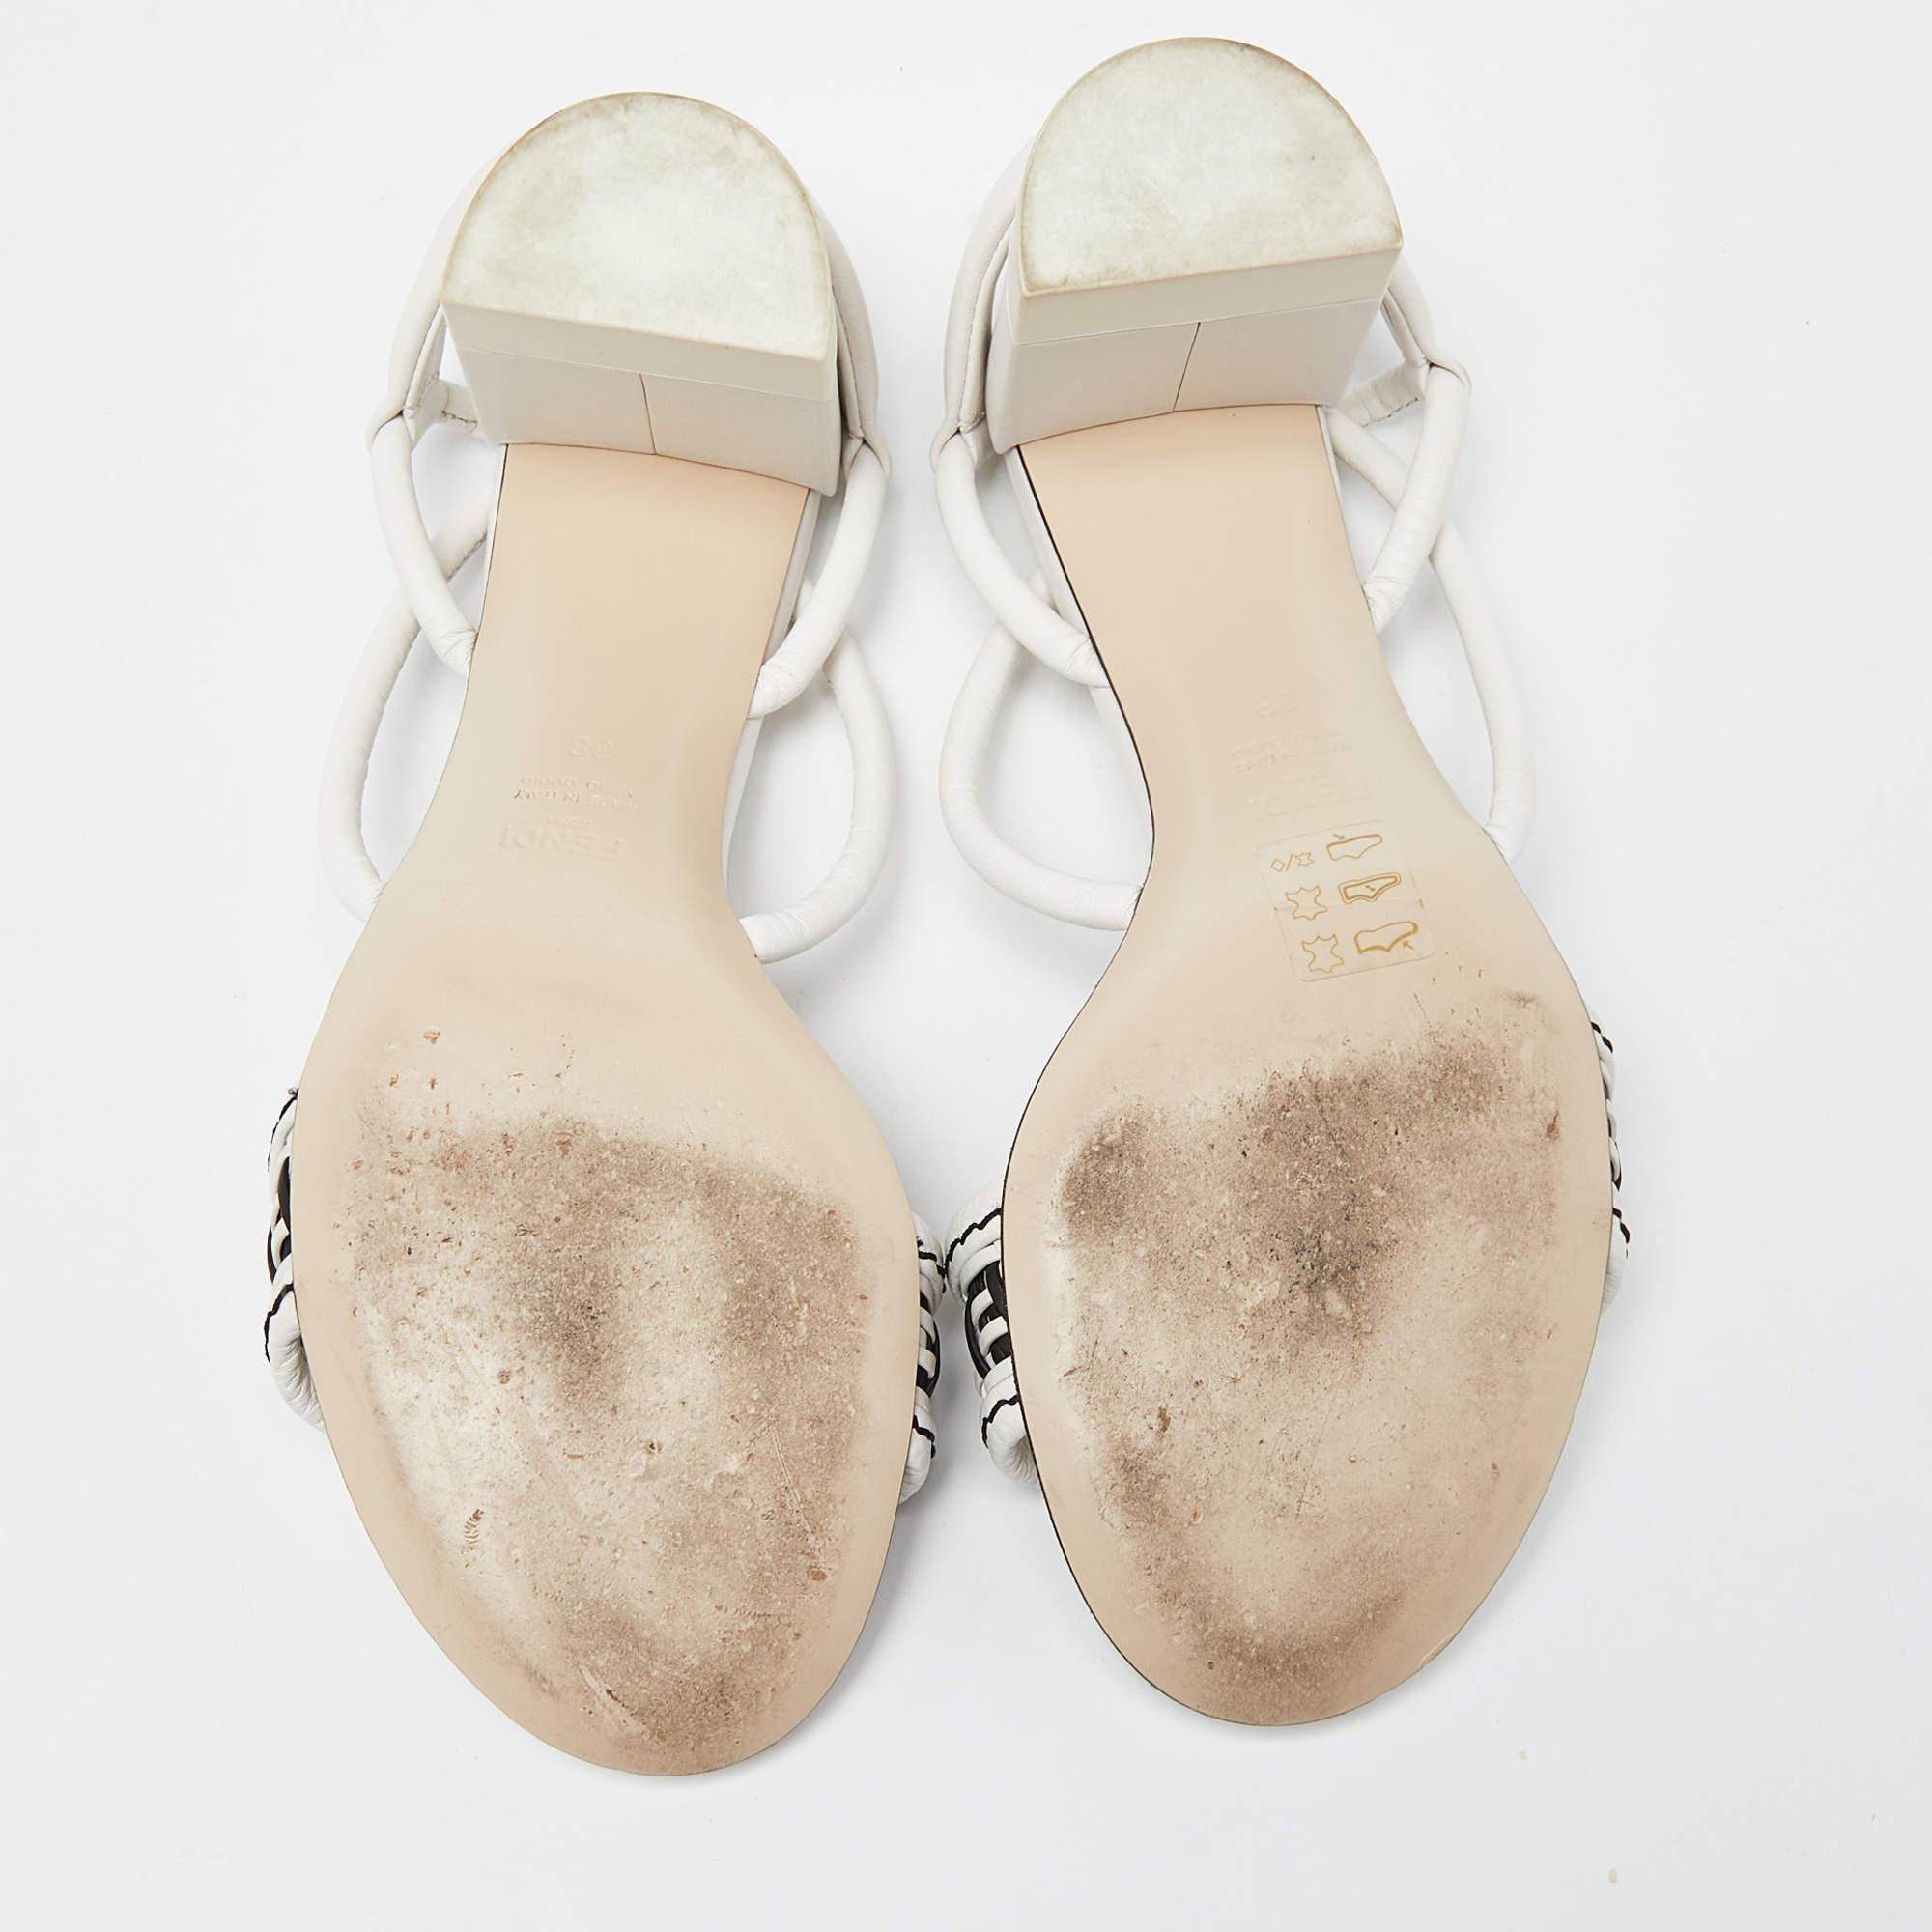 Fendi White/Black Leather Block Heel Ankle Strap Sandals Size 38 5